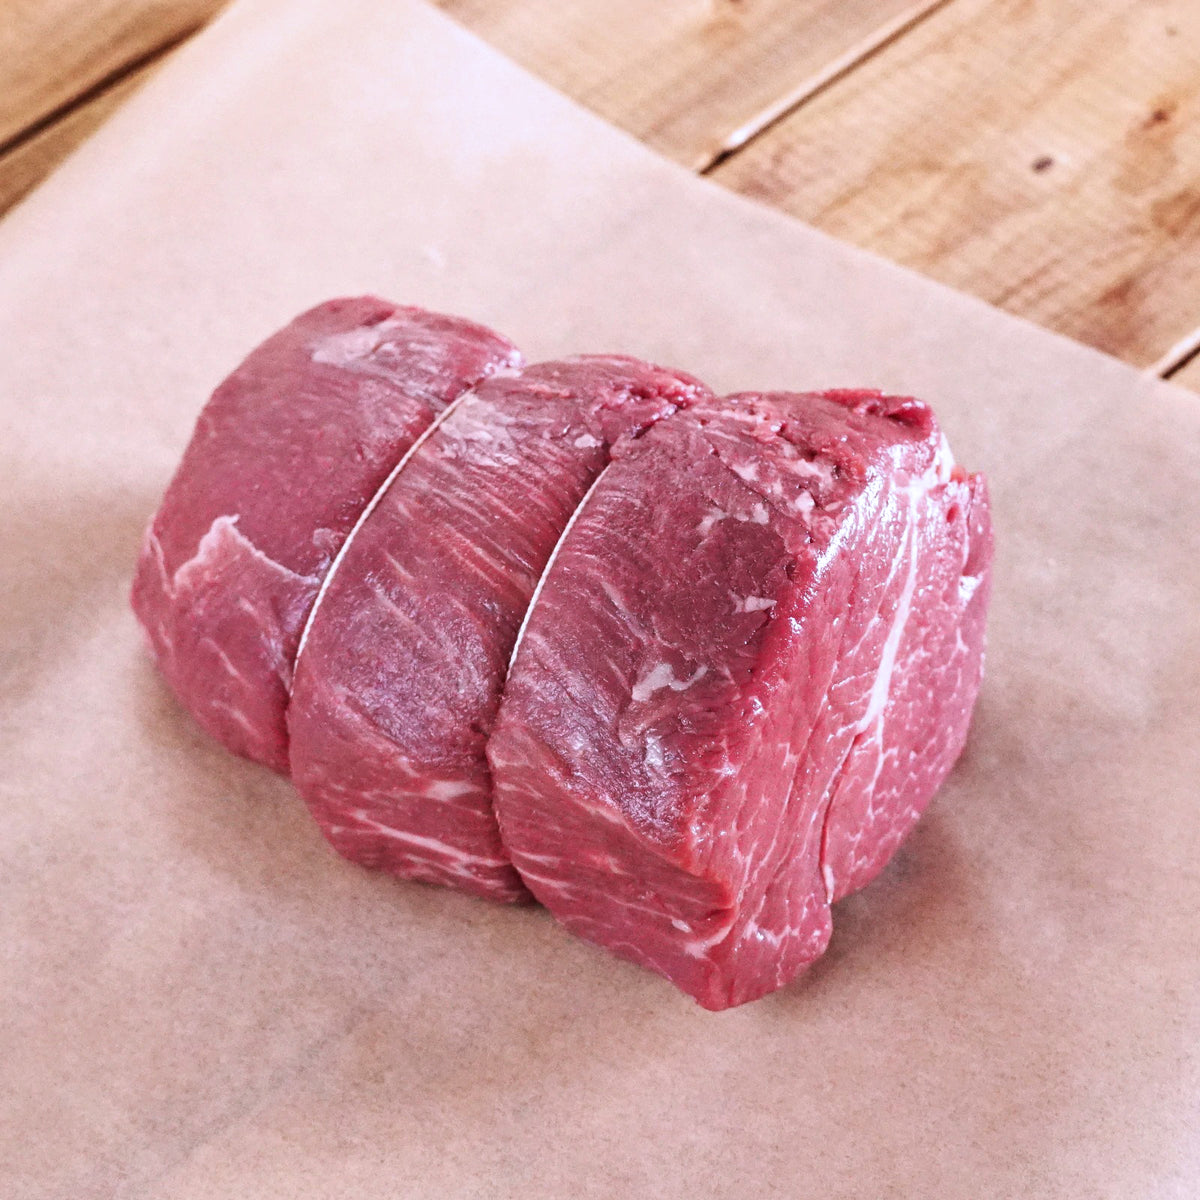 Grass-Fed Premium Beef Filet Roast (1kg) - Horizon Farms